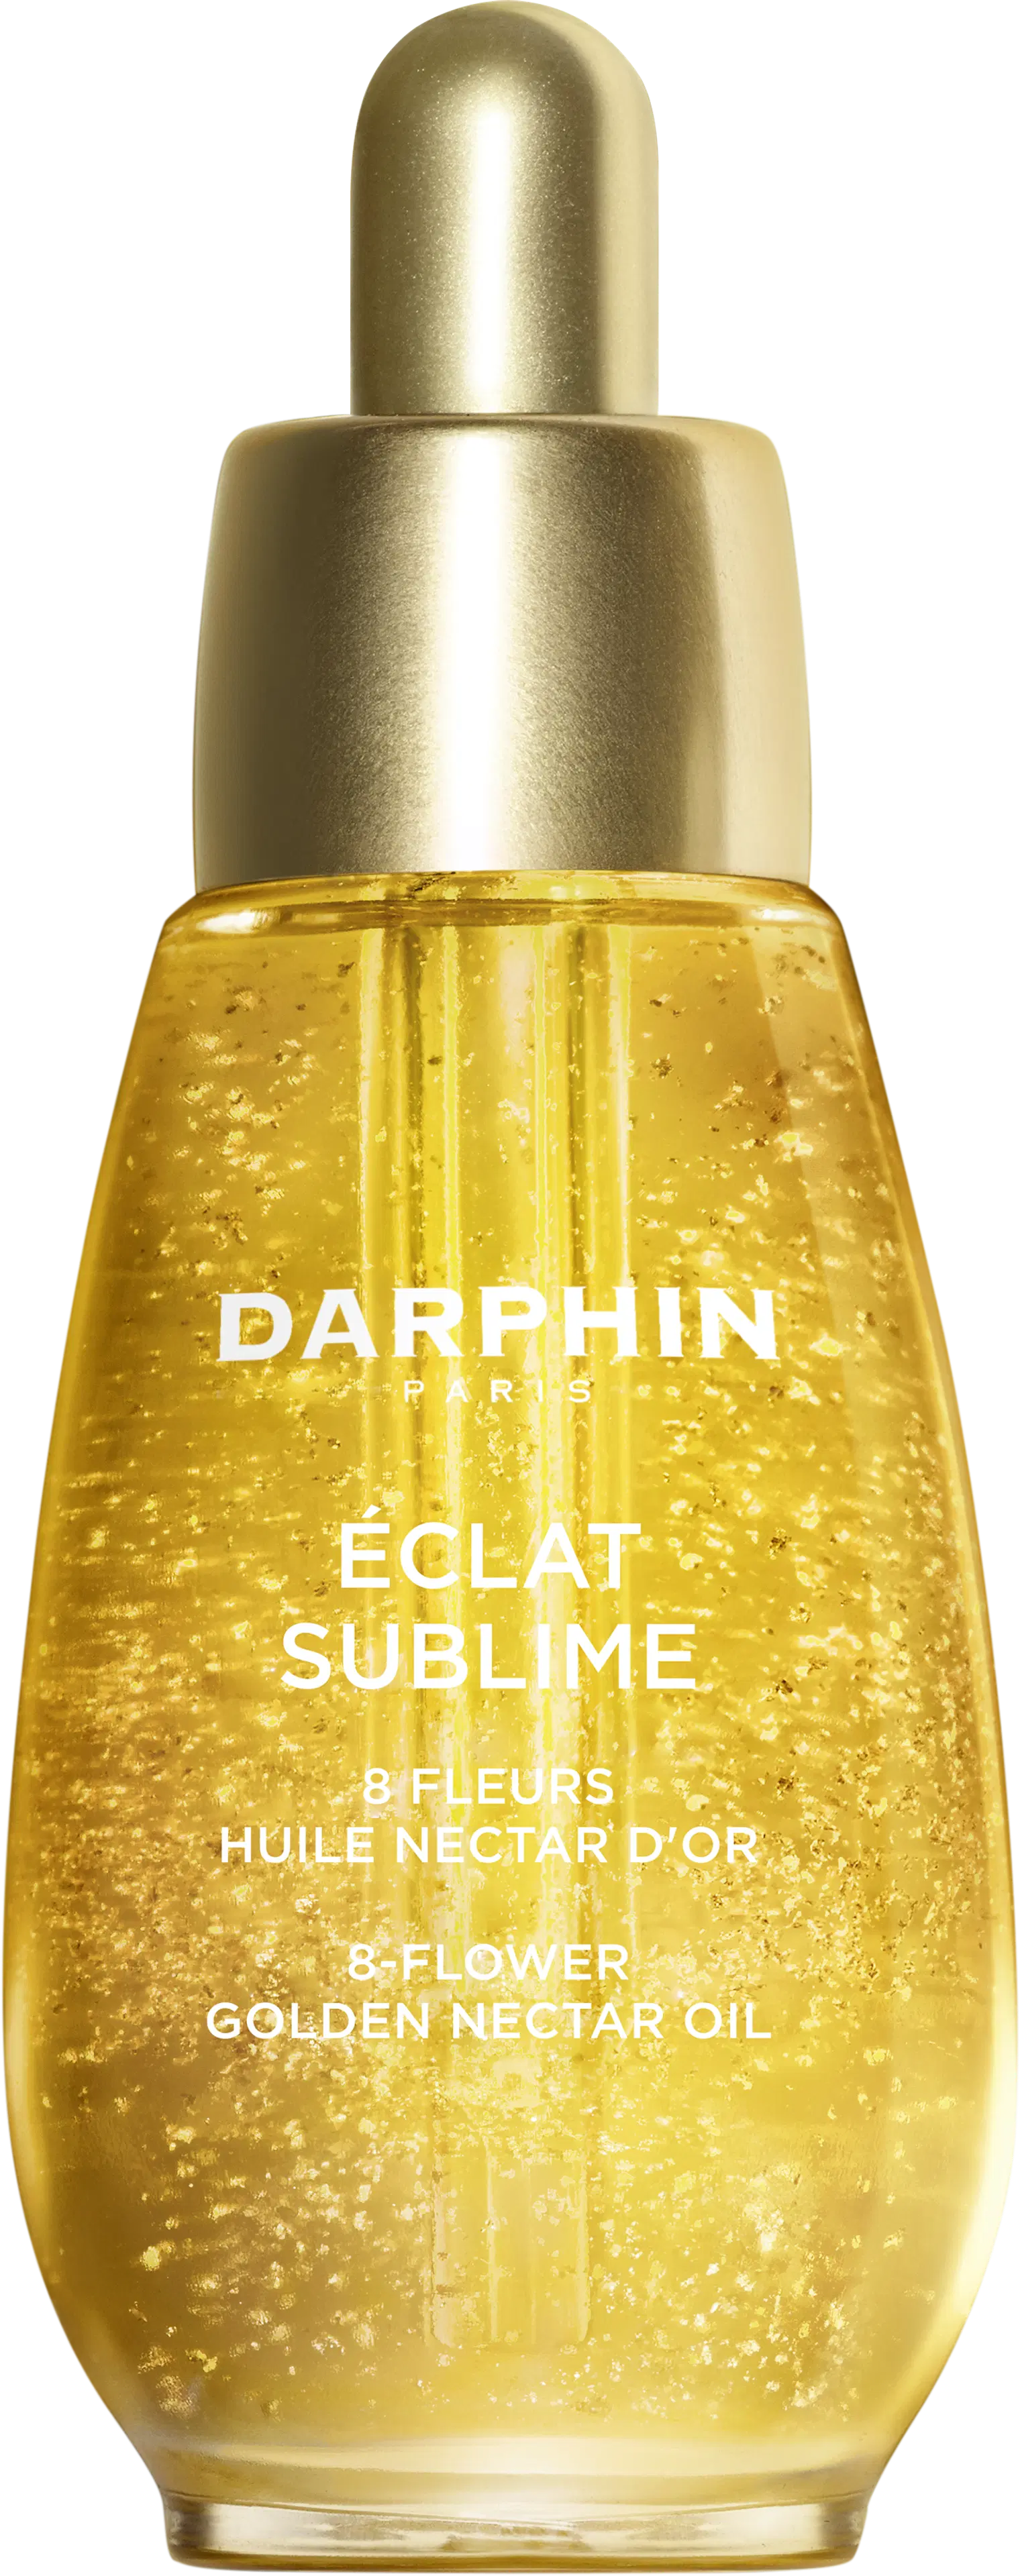 Darphin Eclat sublime 8-flower golden nectar hoitoöljy